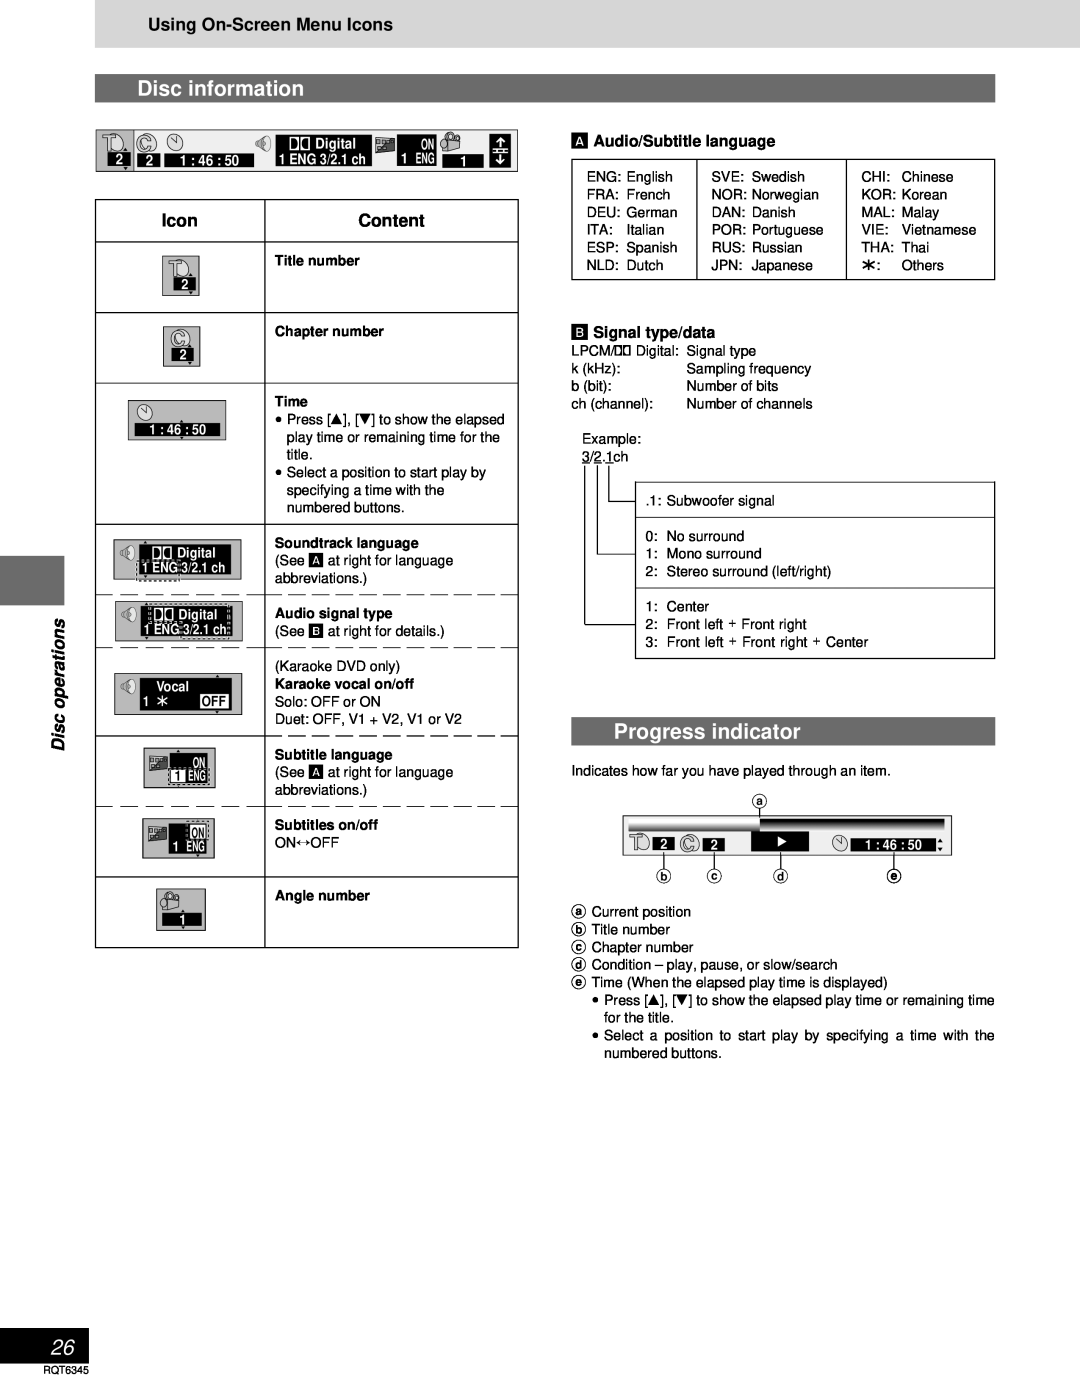 Panasonic SC-DK20 Disc information, Progress indicator, Using On-ScreenMenu Icons, Content, A Audio/Subtitle language 